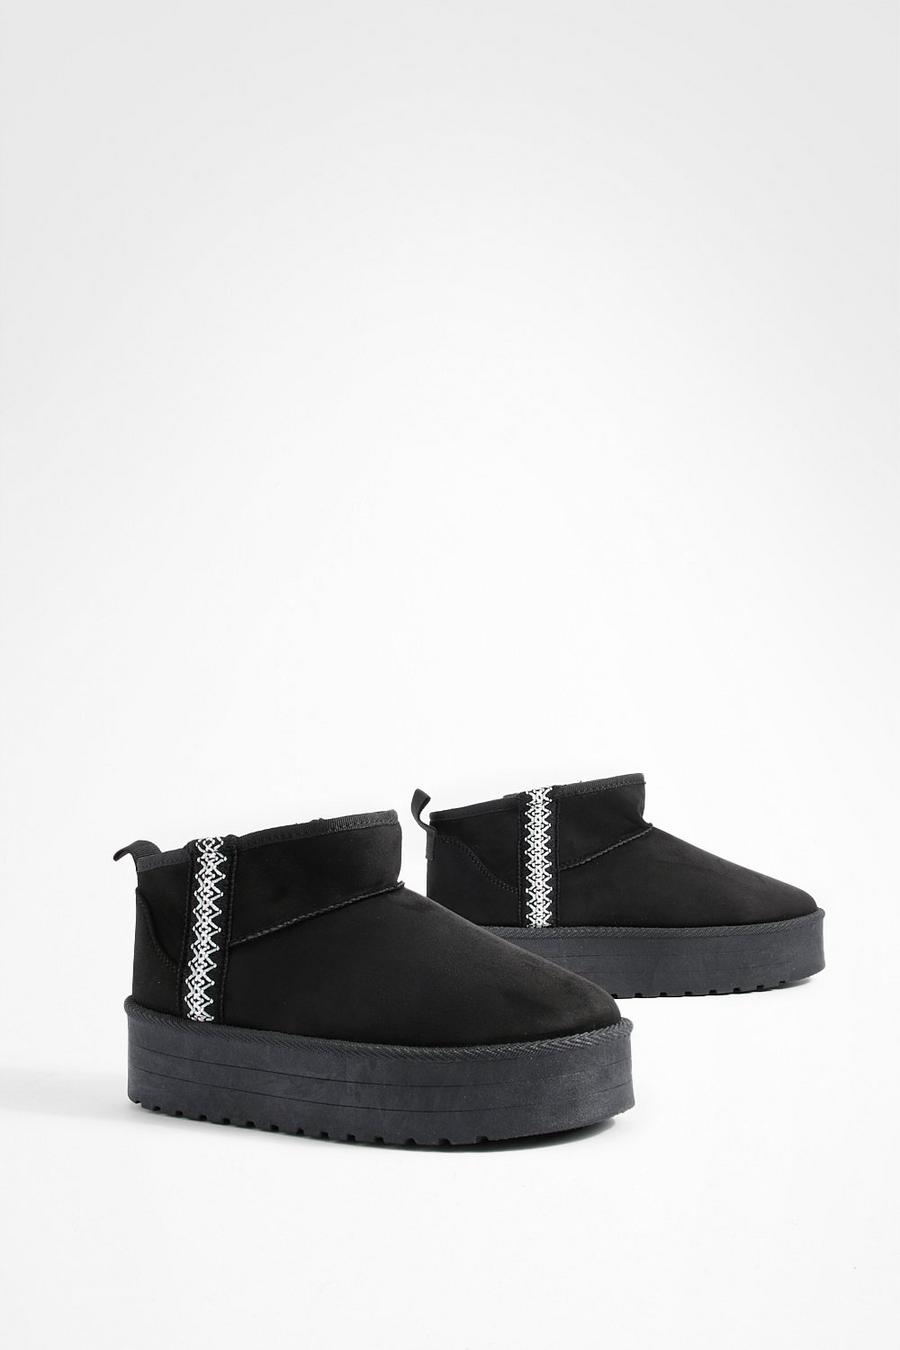 Black Embroidered Detail Cozy Platform Boots